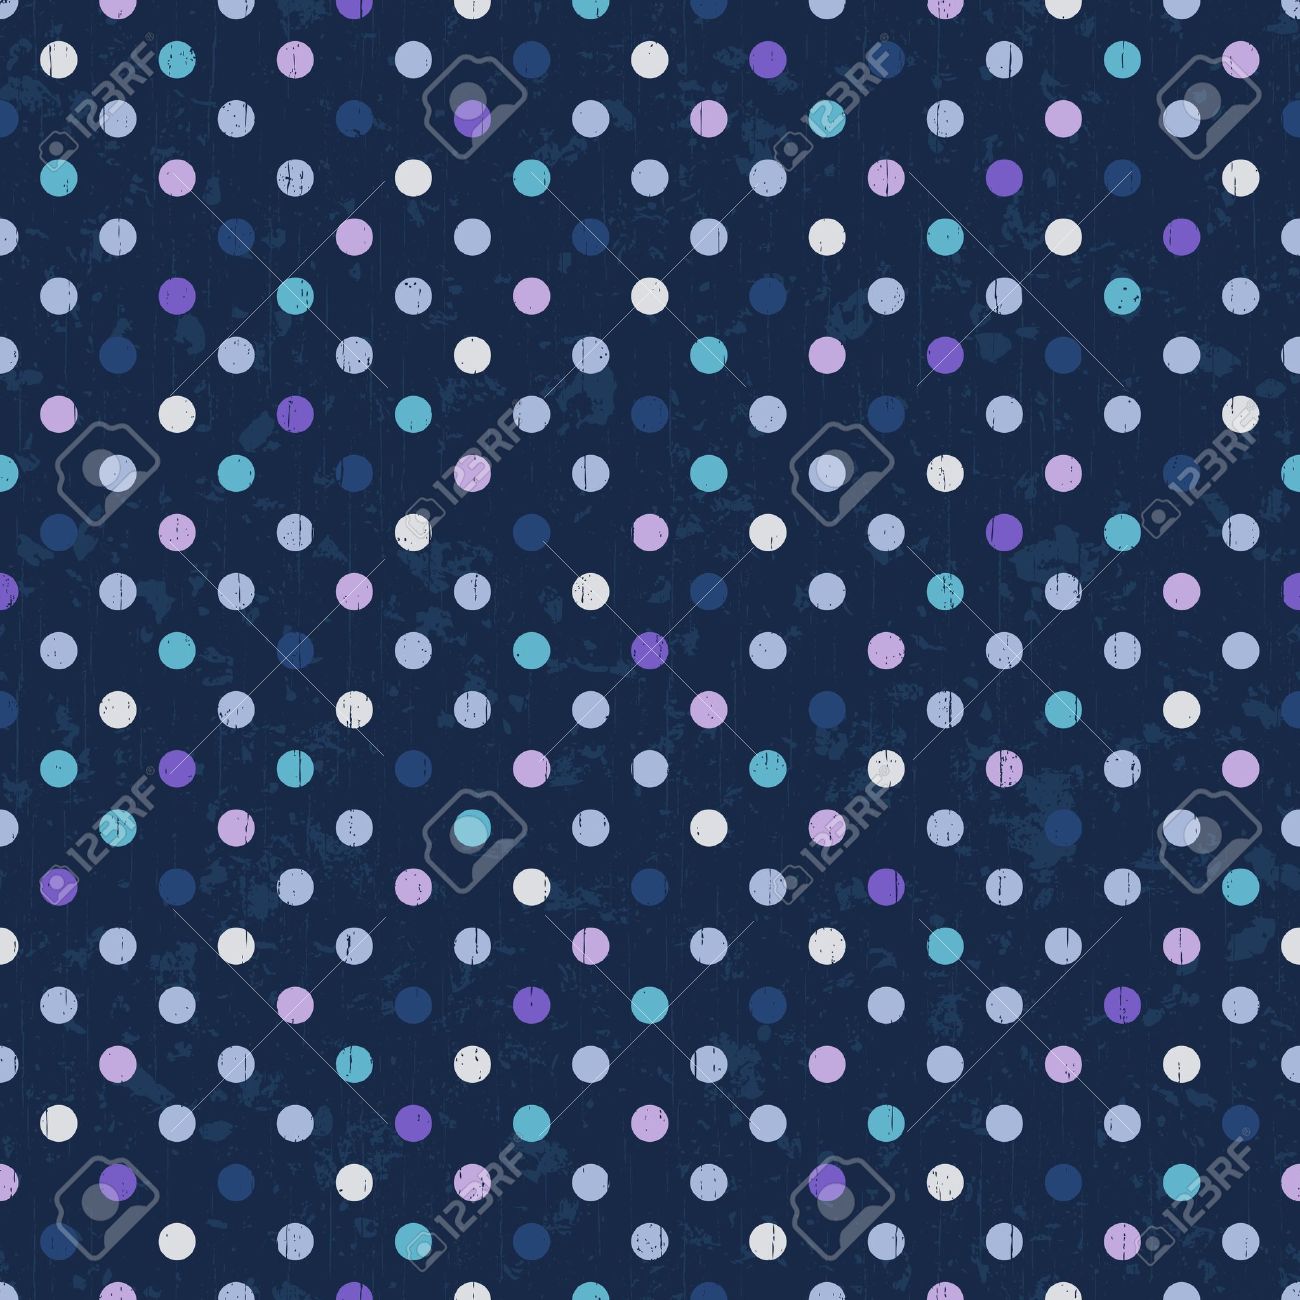 distressed dots pattern